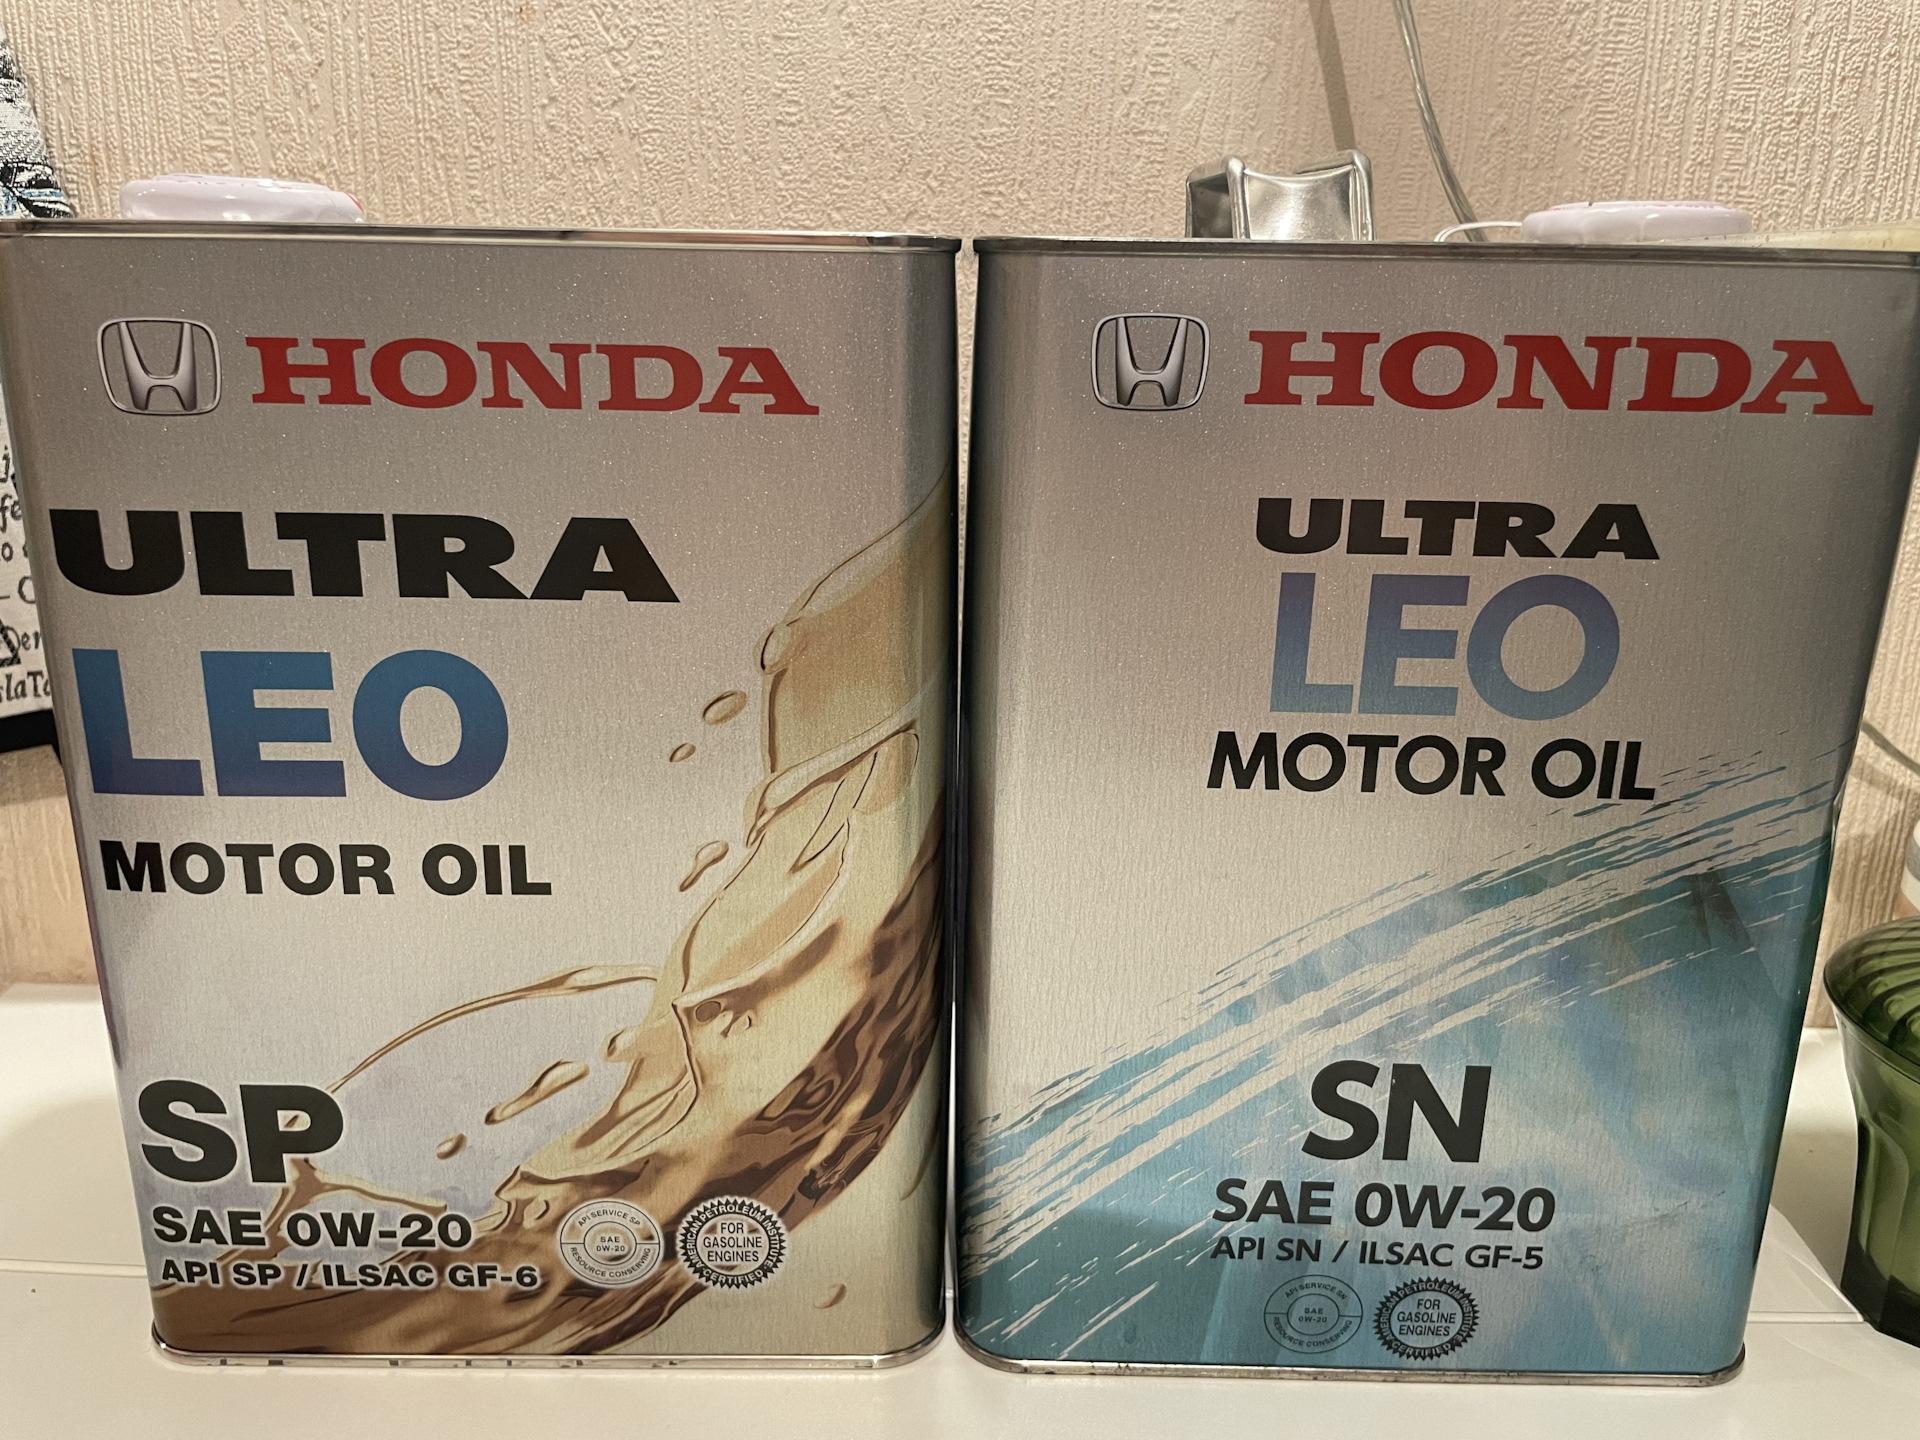 Масло honda leo. Масло Honda Ultra Leo 0w20. Honda Ultra Leo 0w20 SP. Honda Ultra Leo SP 0w-20 (20,0). Honda Ultra Leo SP 0w-20 (4,0).